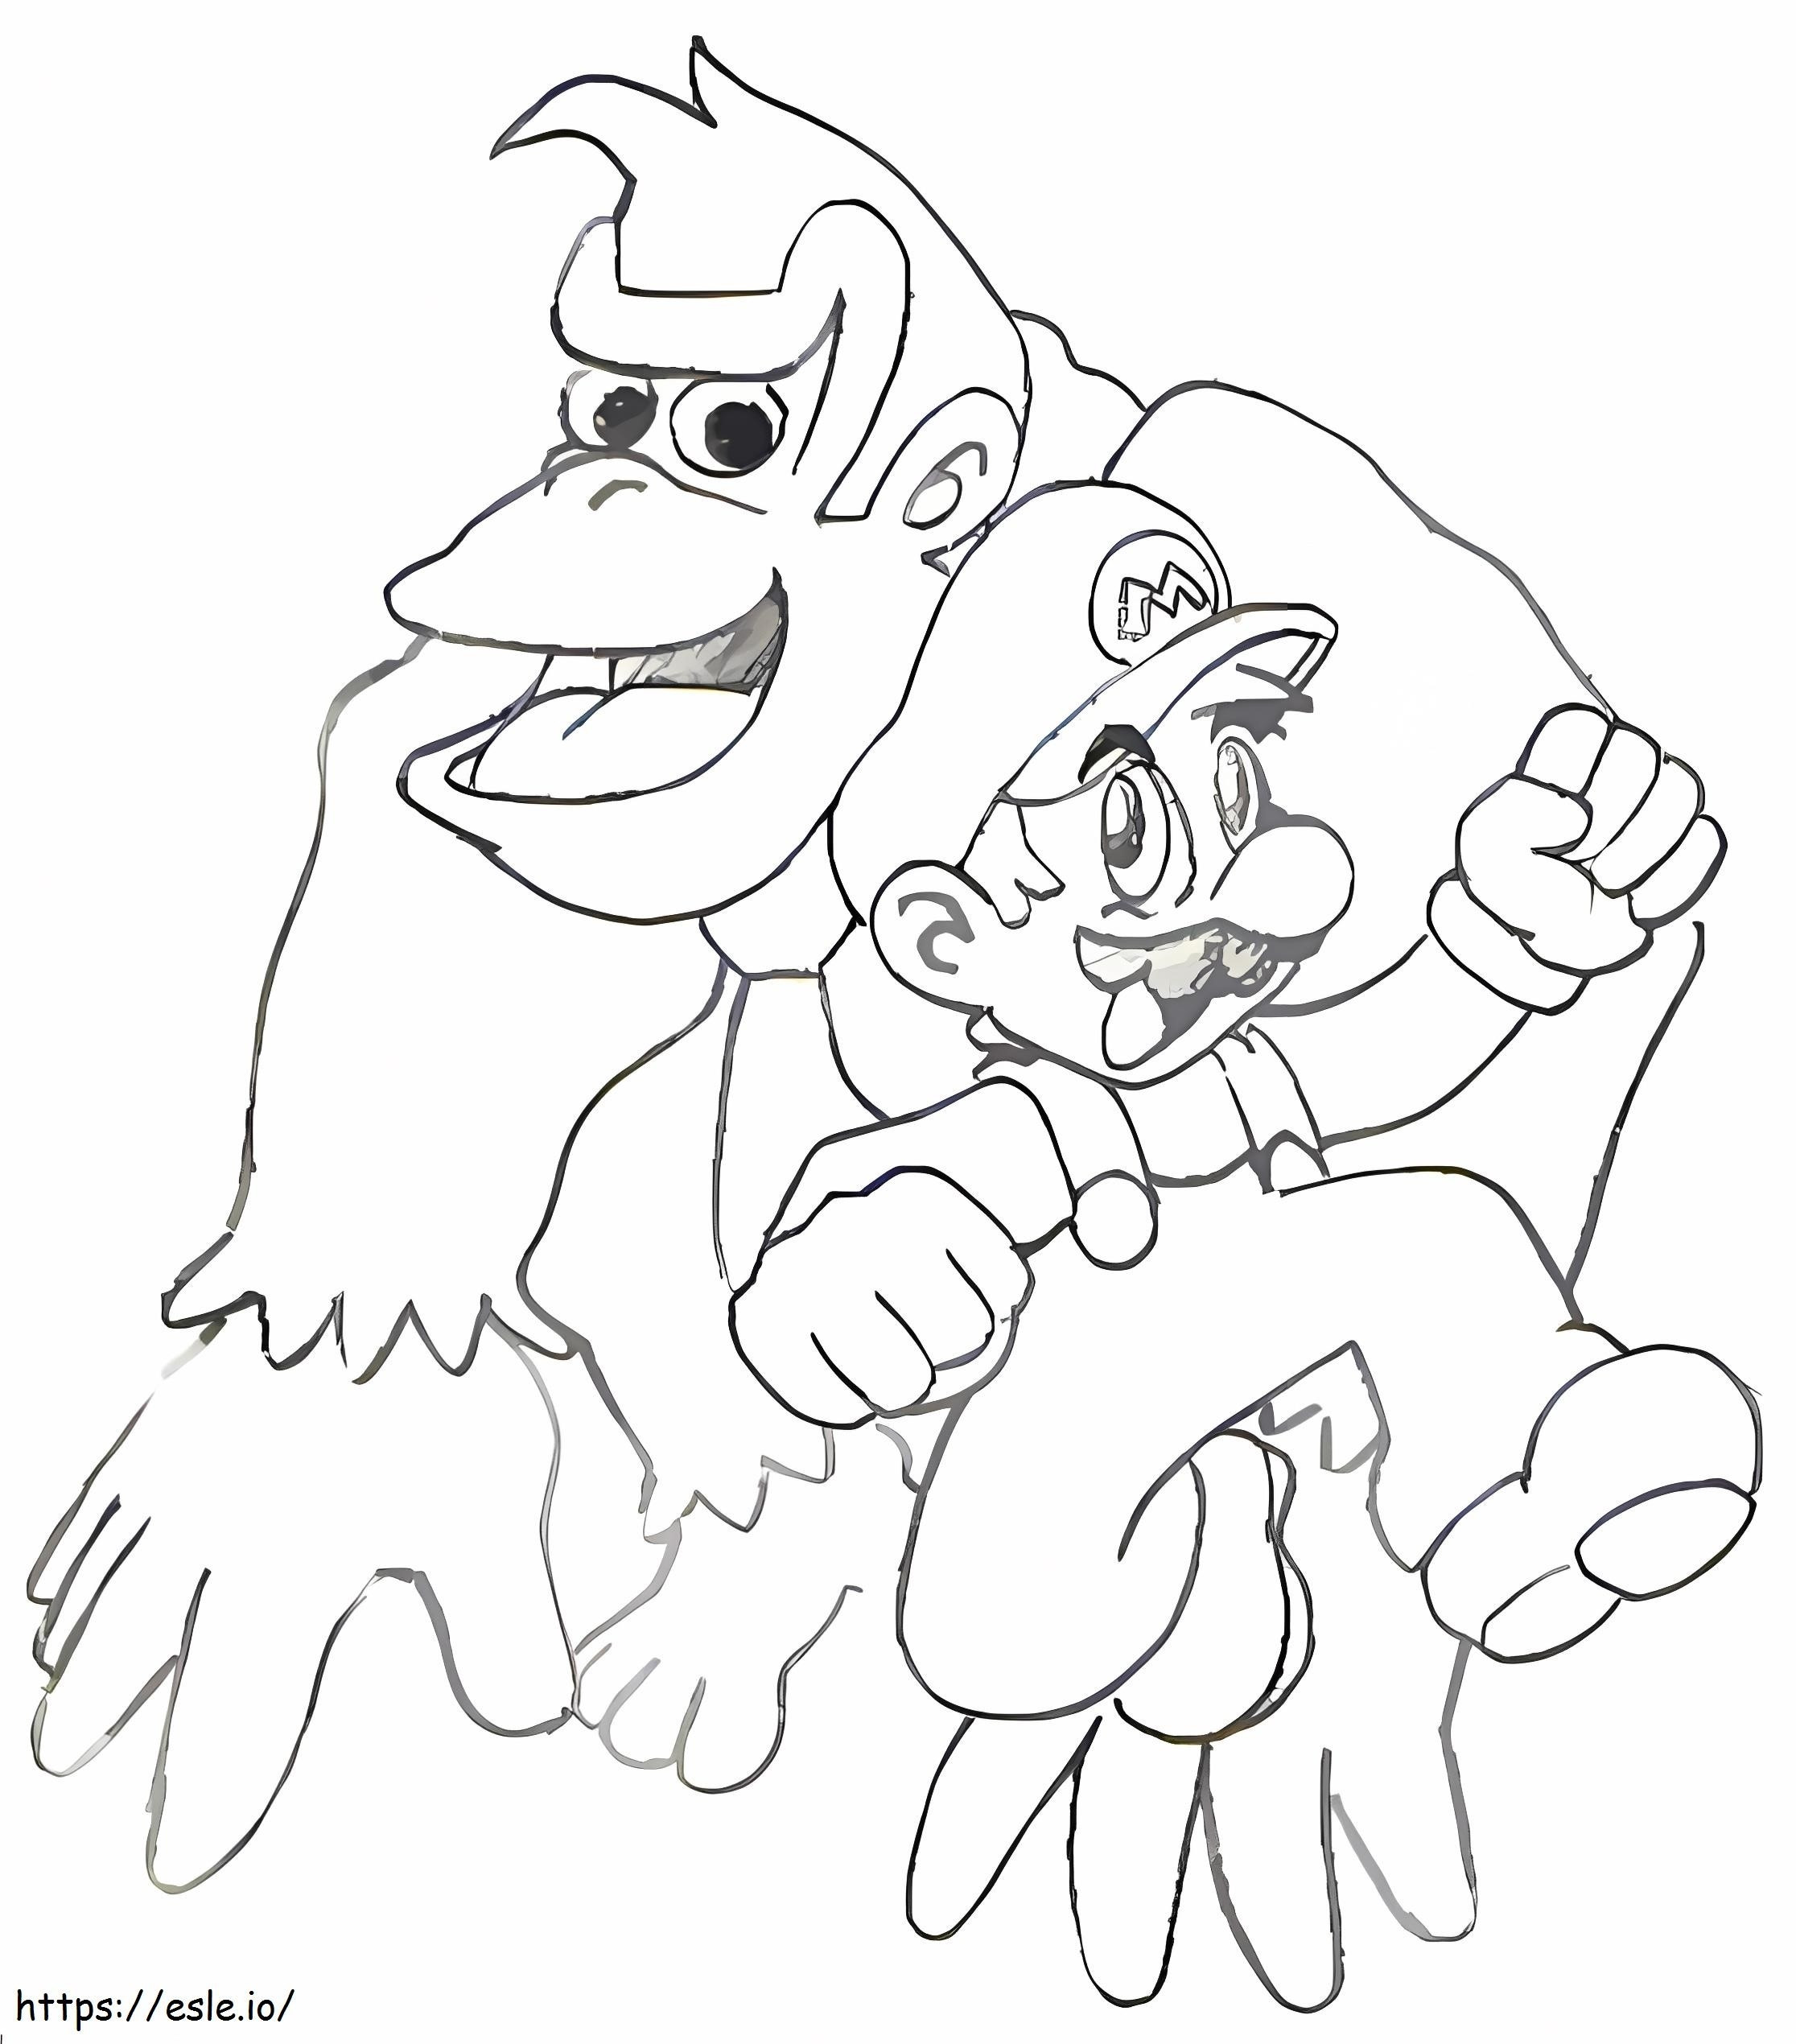 Mario e Donkey Kong para colorir